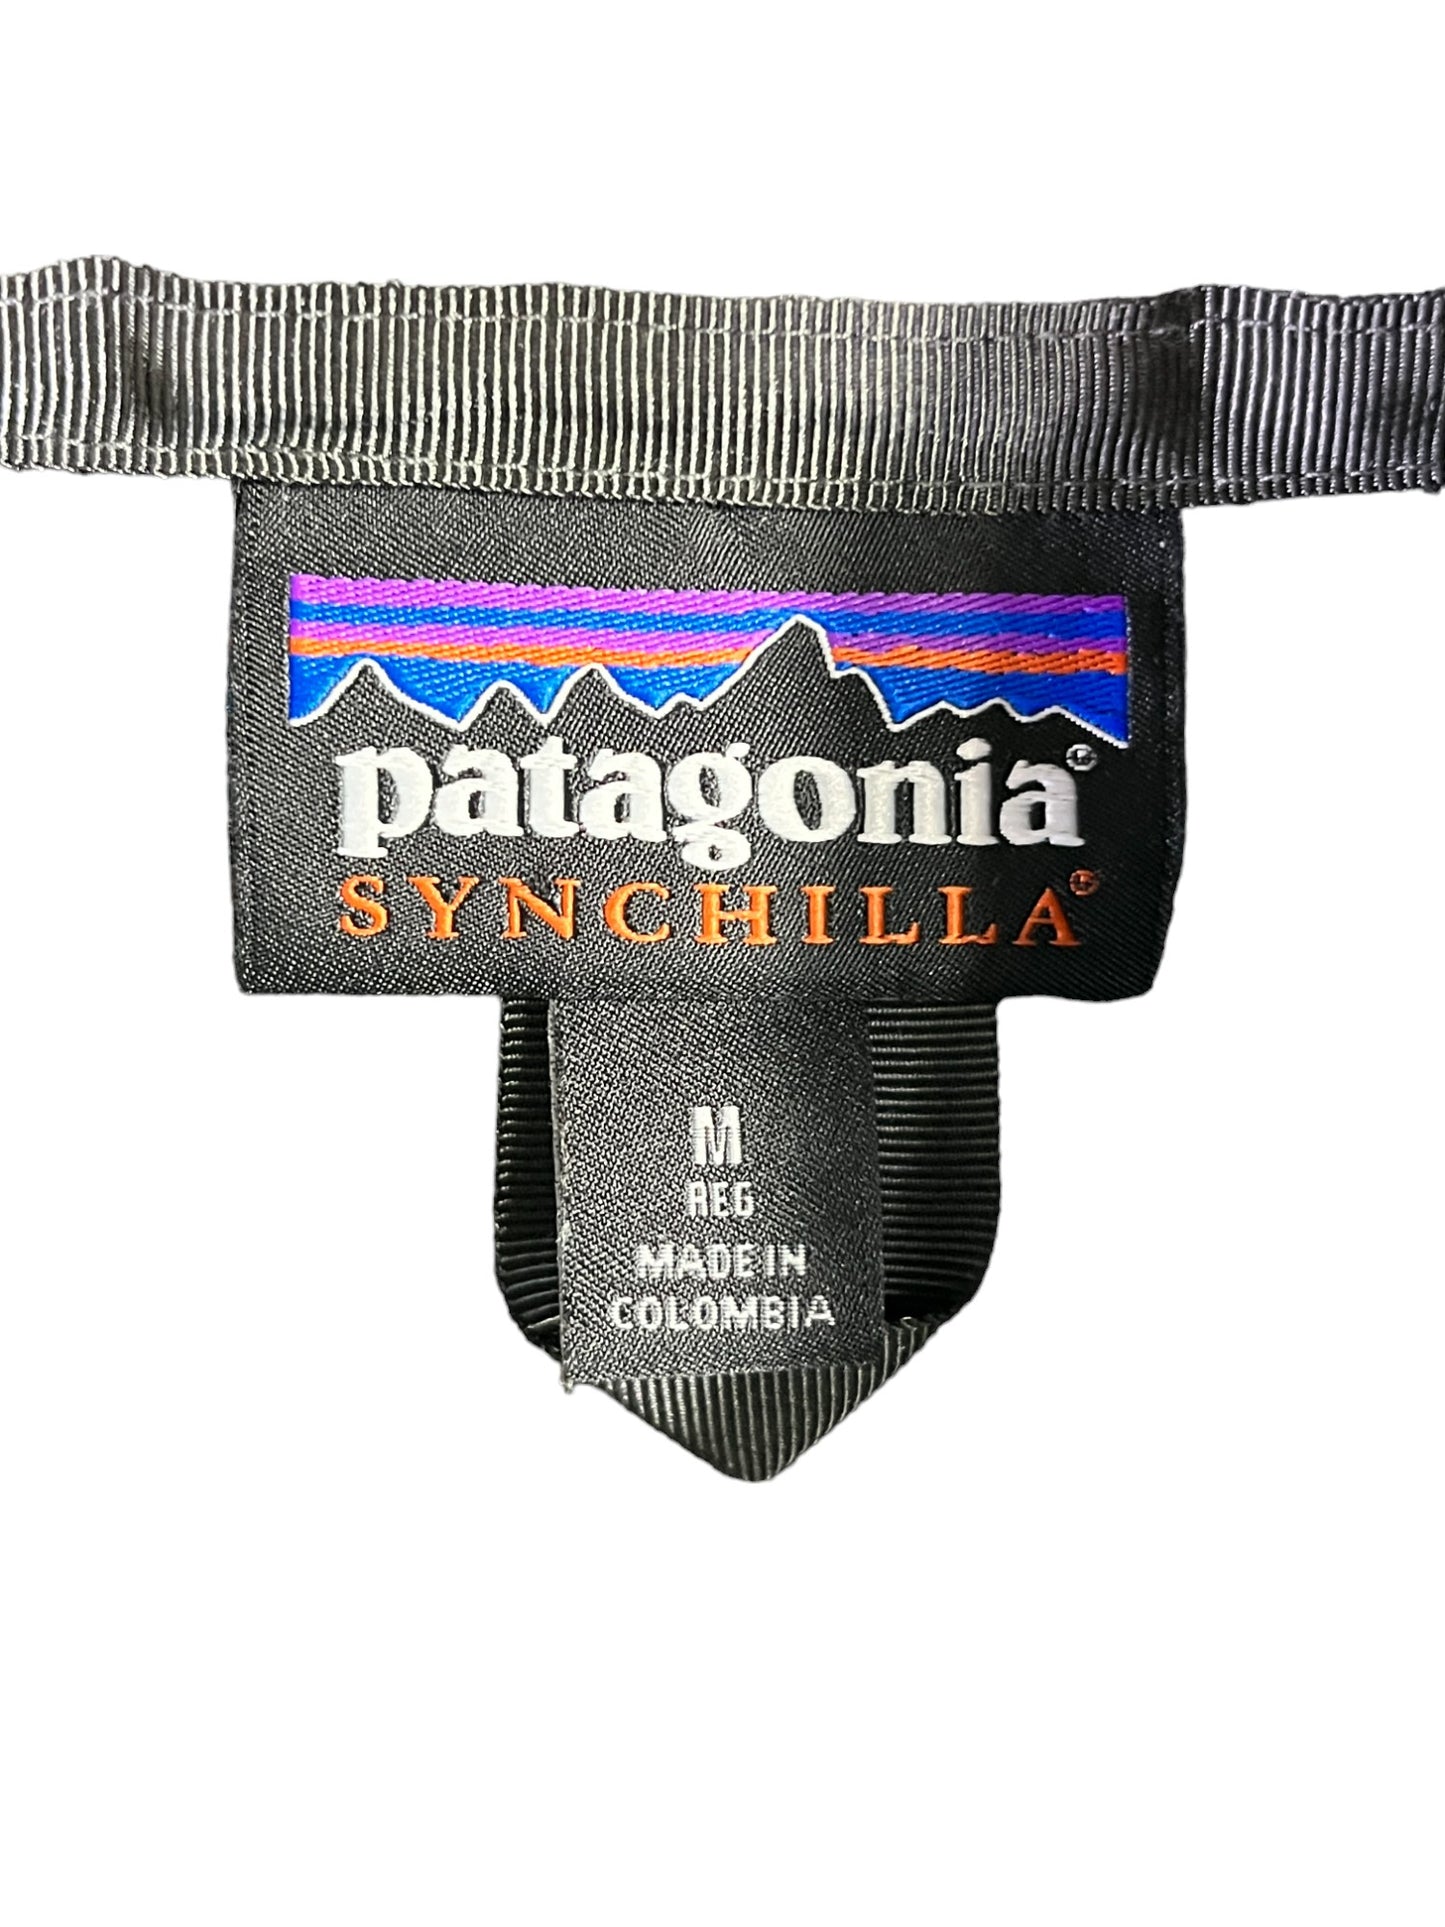 Patagonia Synchilla Grey Blue Zip Up Vest Size Medium